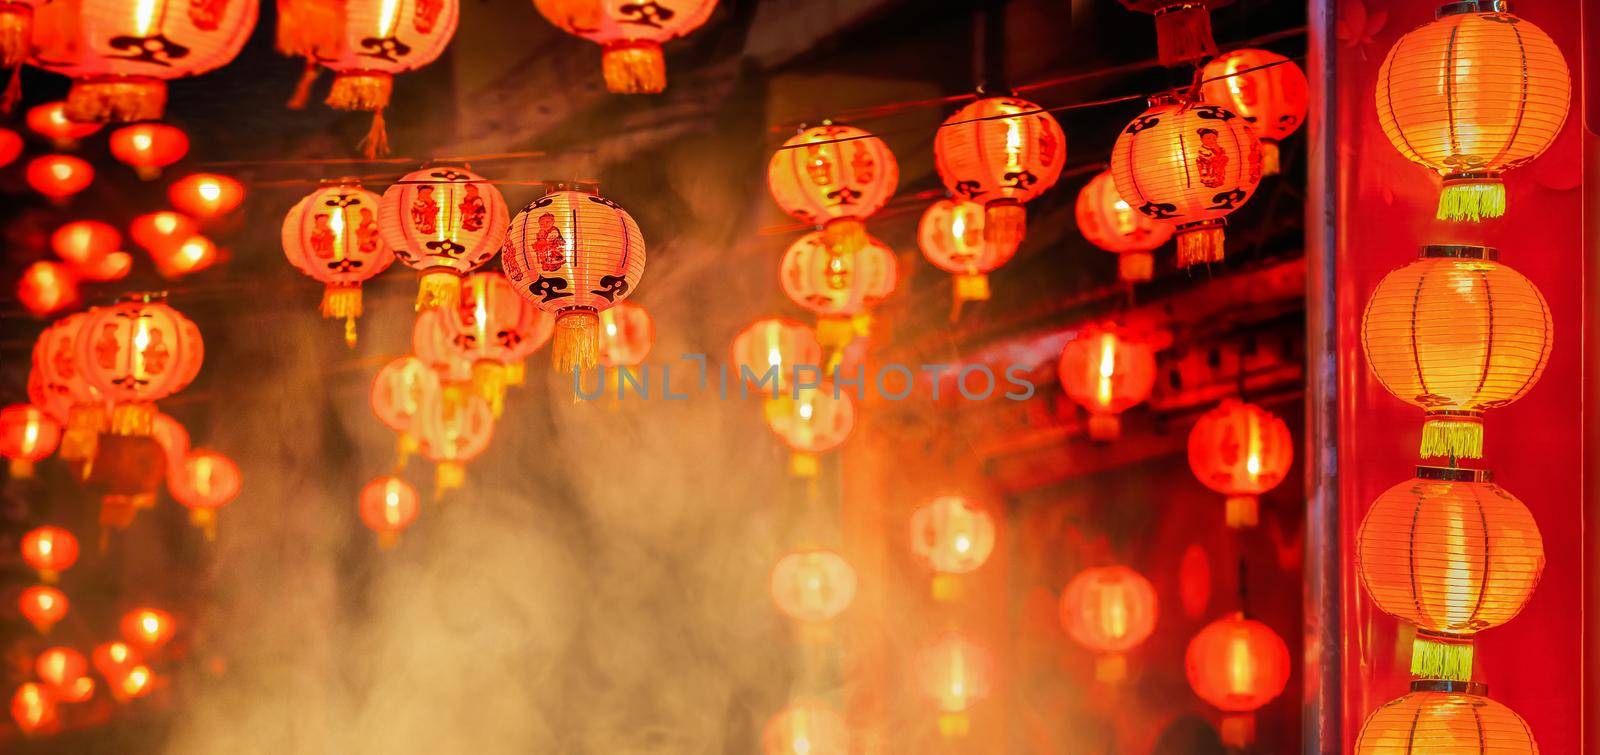 Chinese new year lanterns in chinatown, firecracker celebration